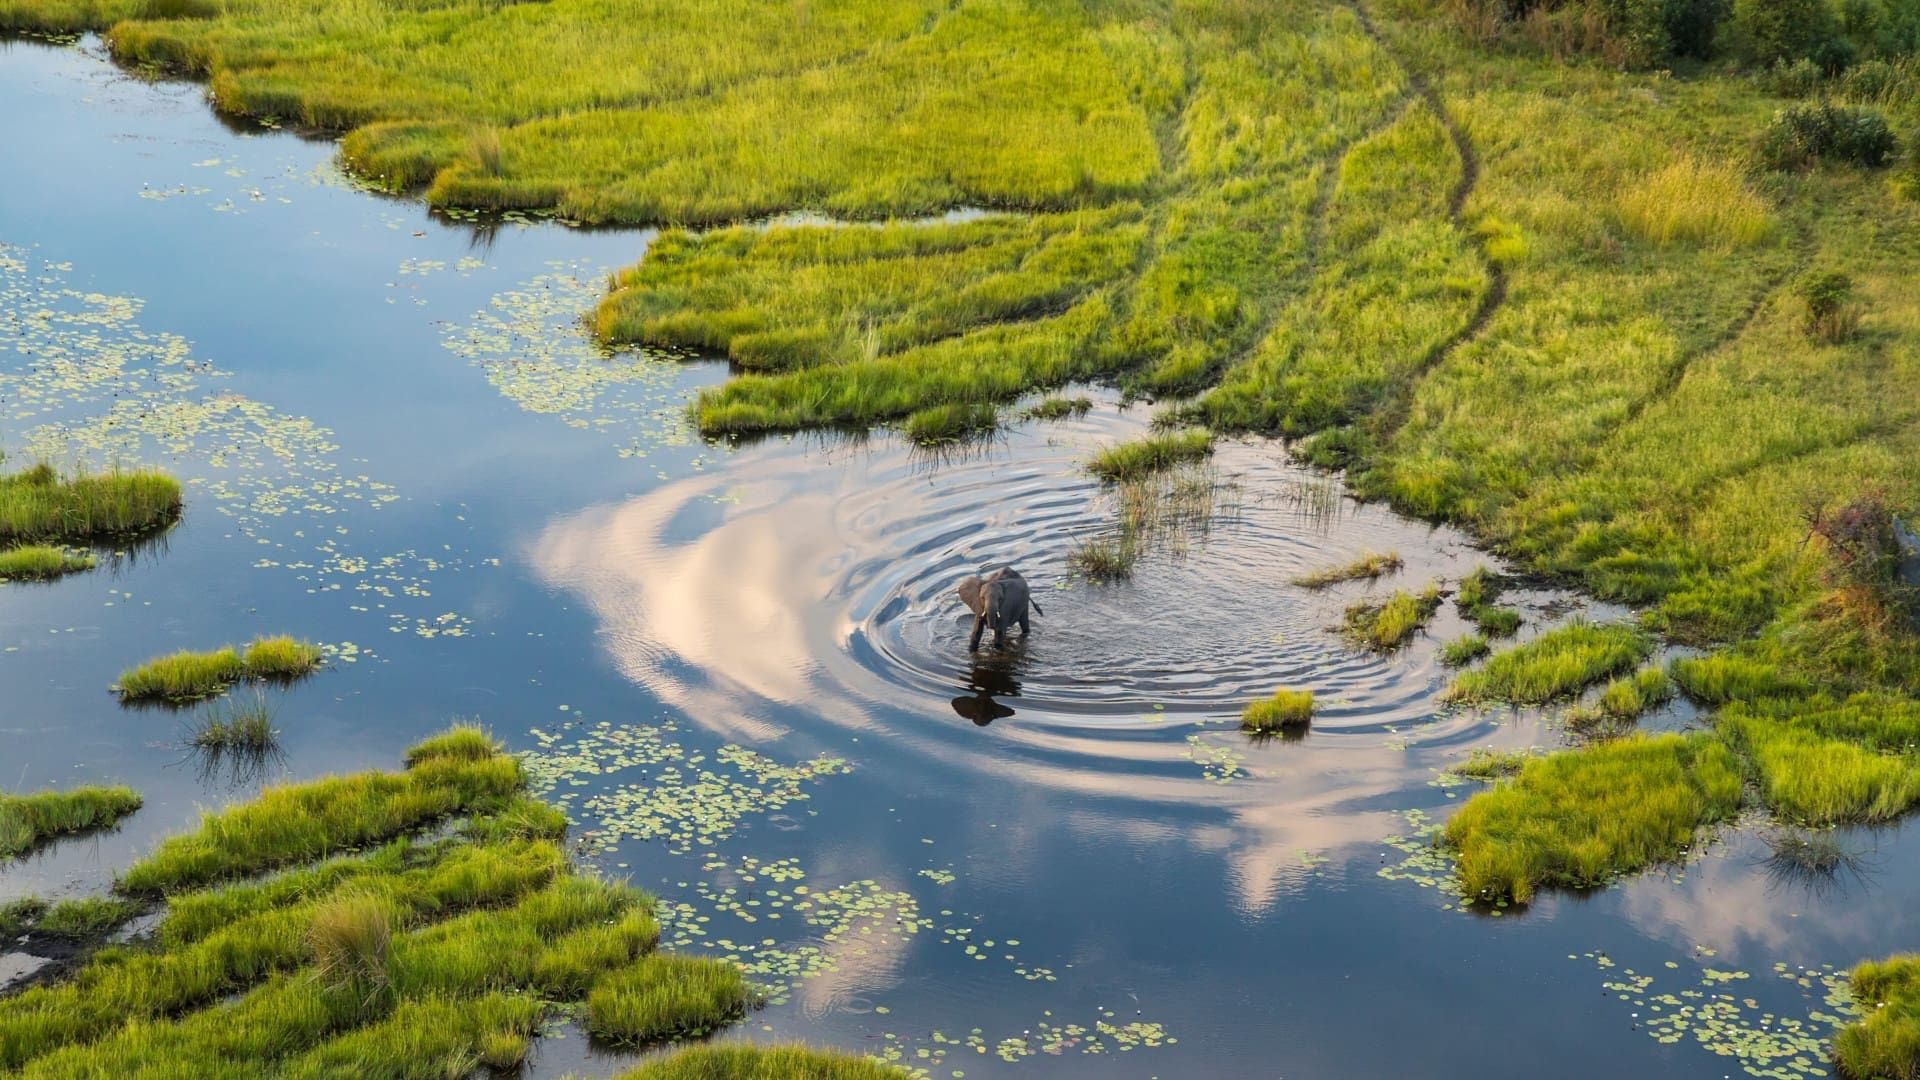 Okavango: A Flood of Life background